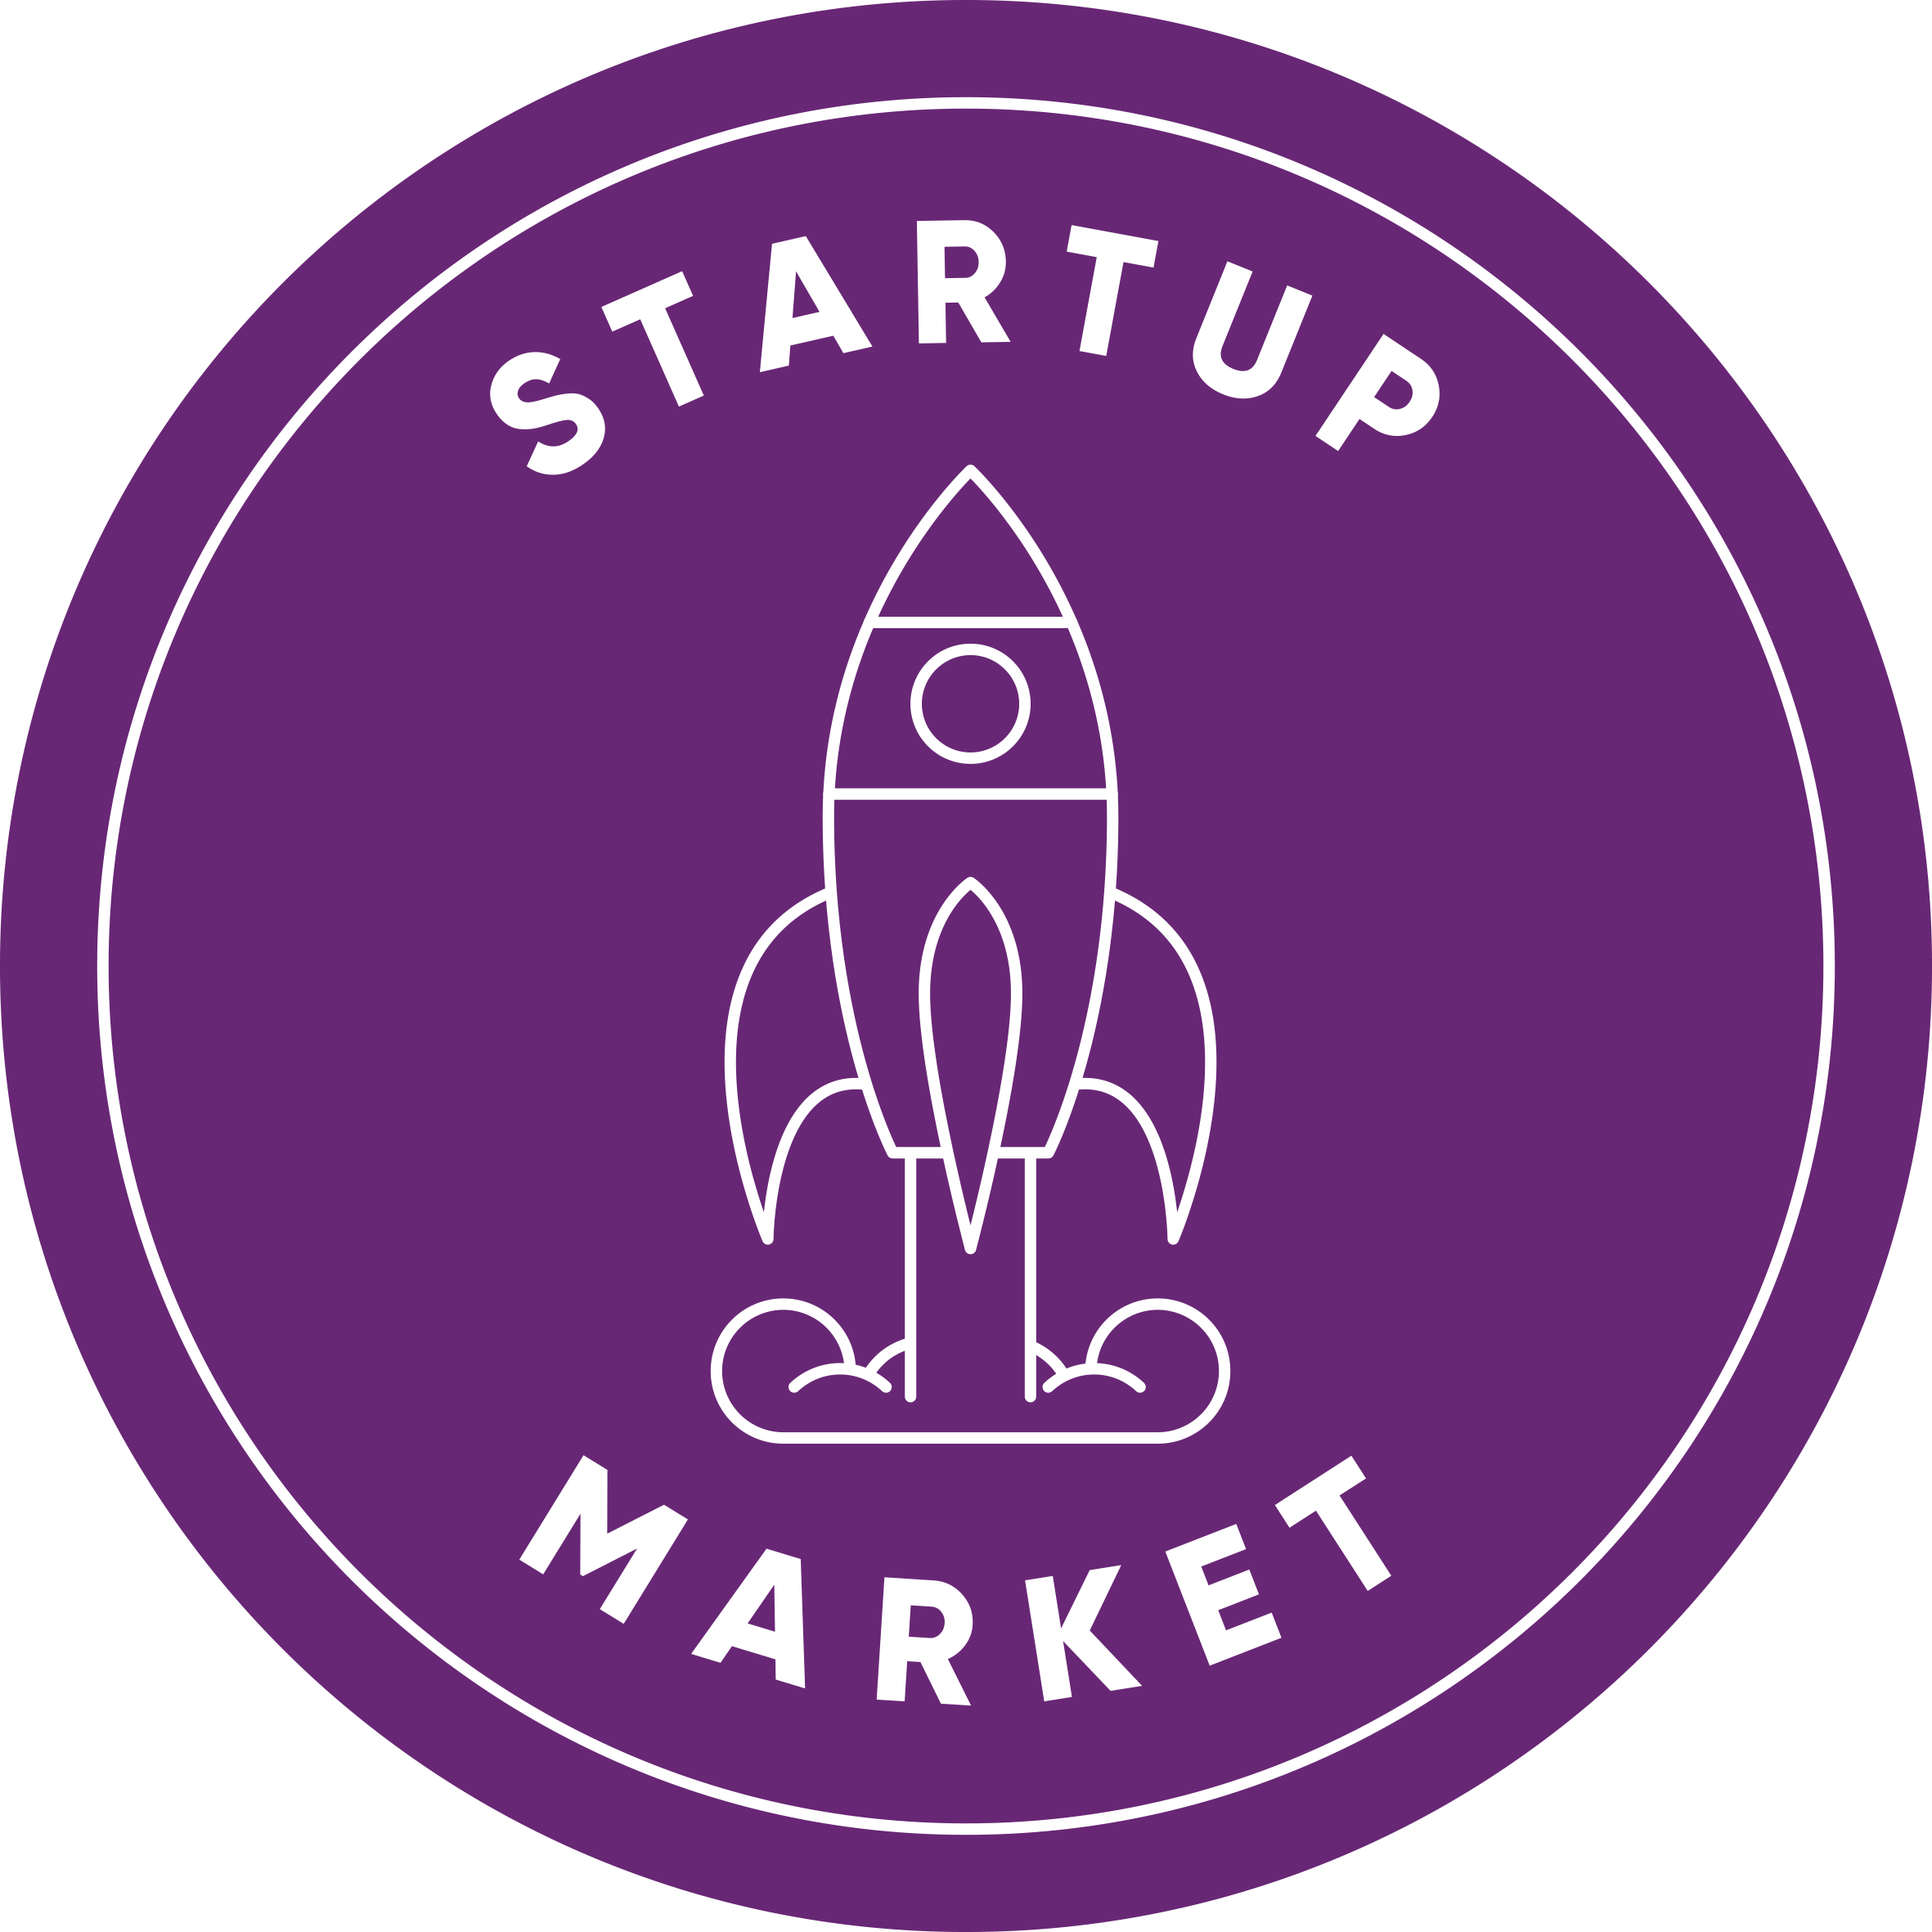 Startup Market Roundel